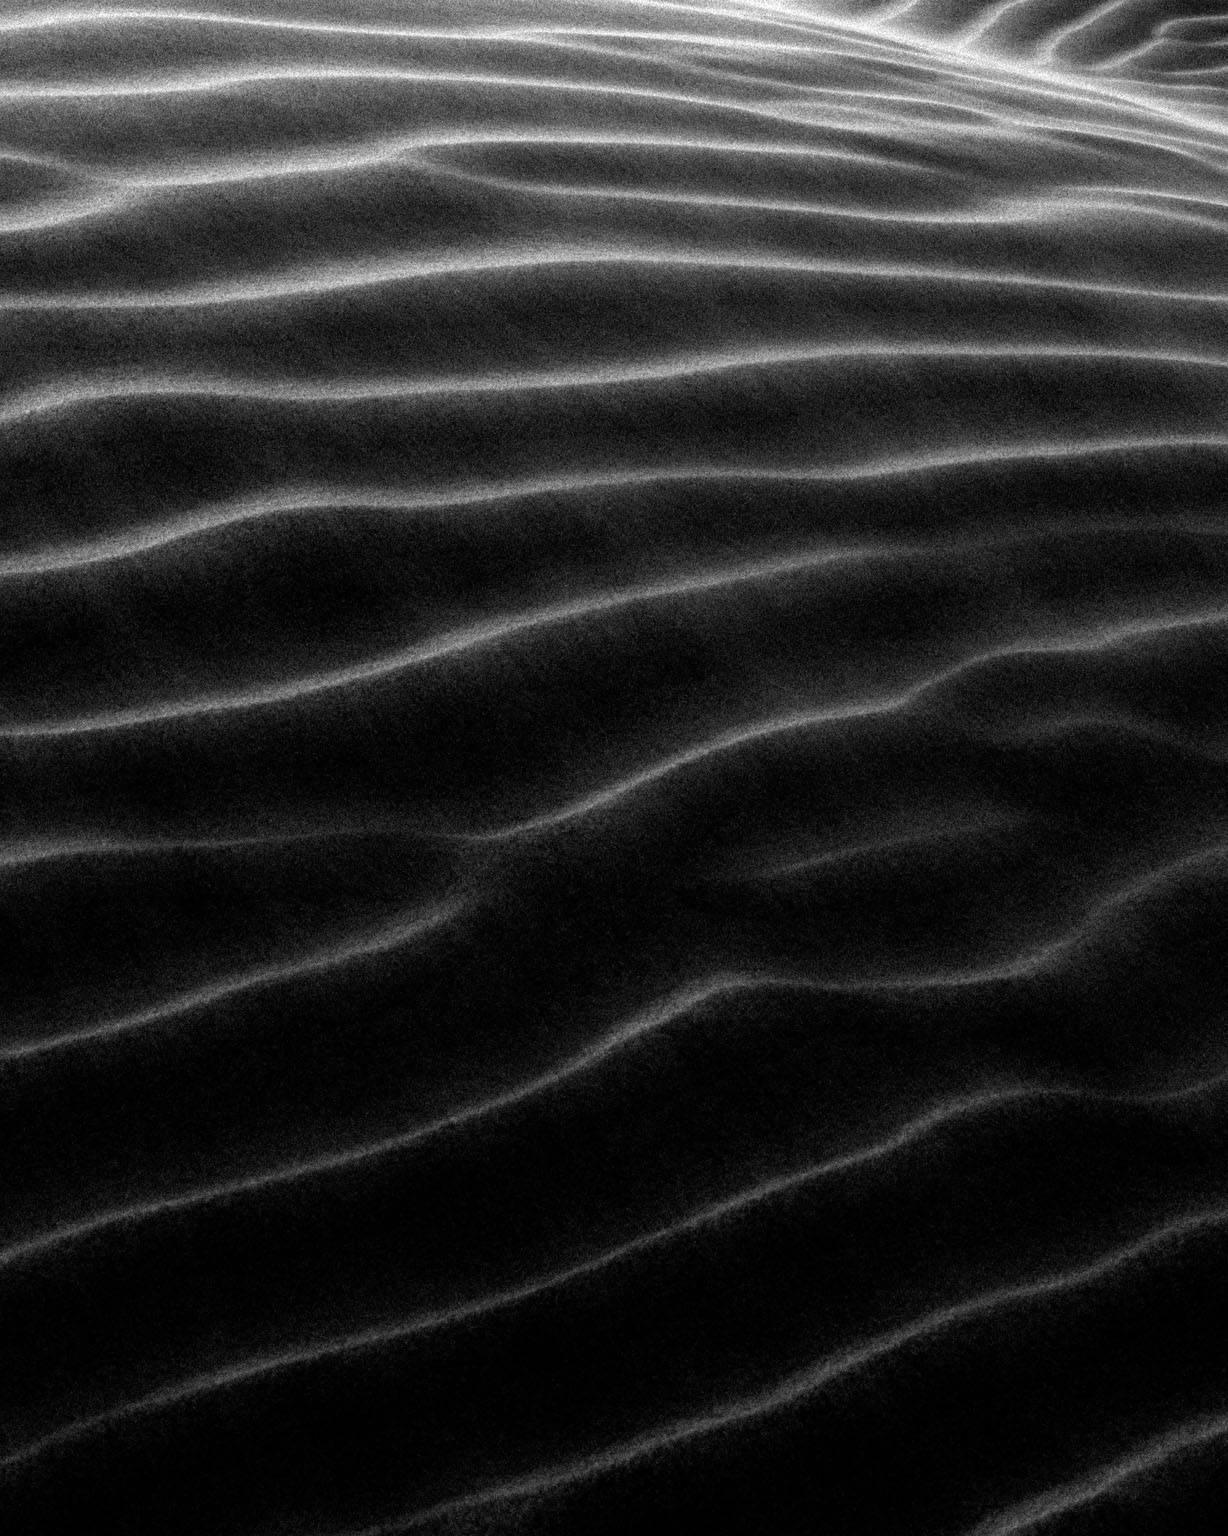 Sand Dunes Series #8 - Photograph by Keiji Iwai